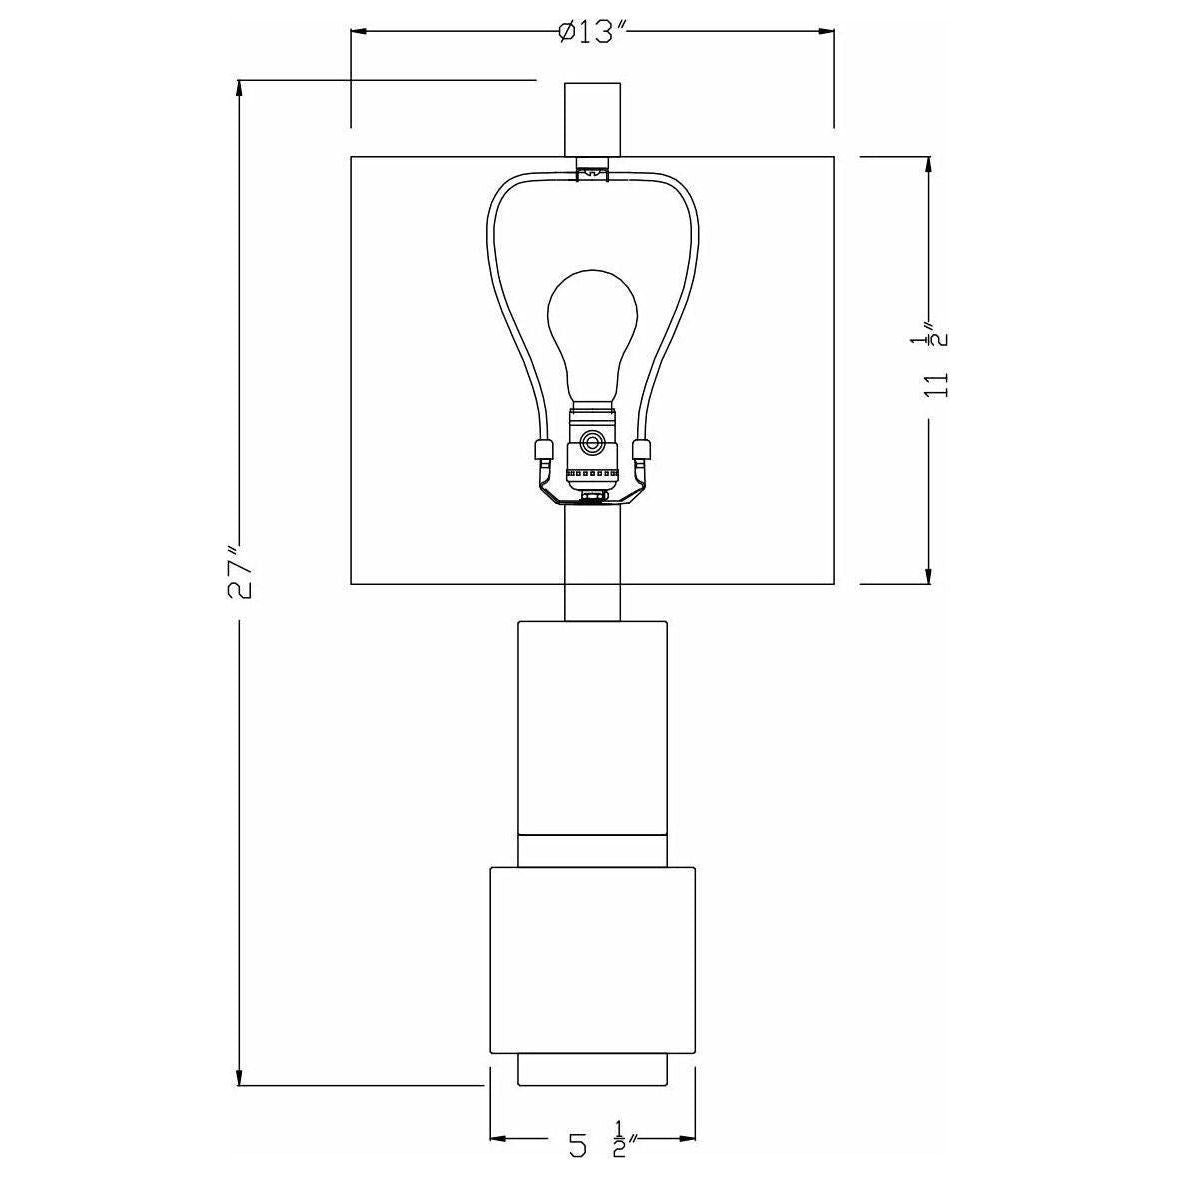 Flow Decor - Cordelia Table Lamp - Lights Canada